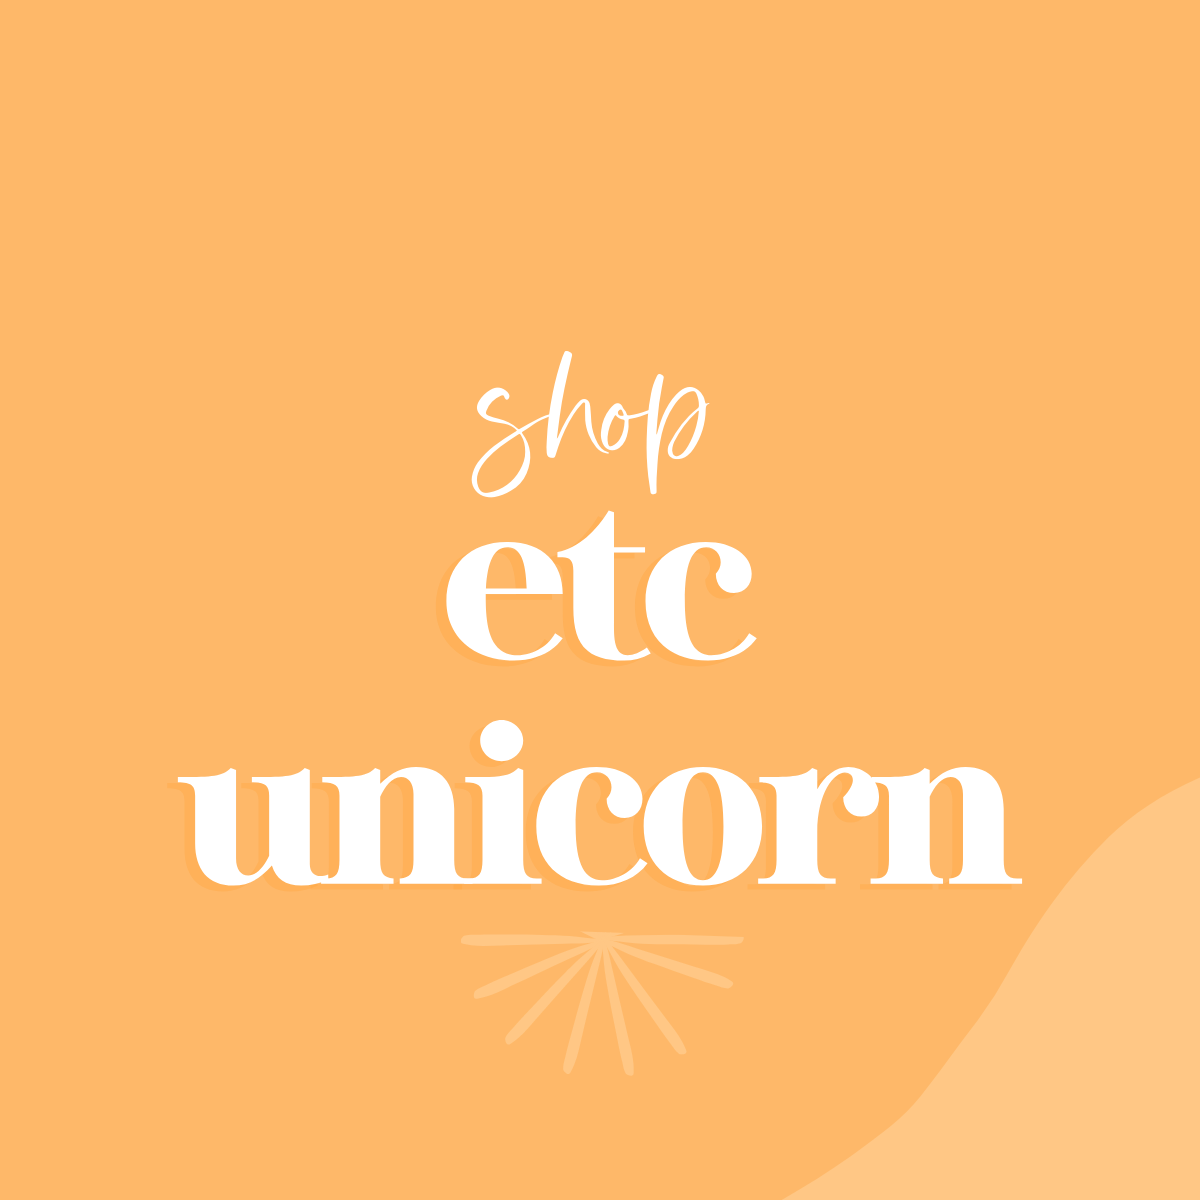 ETC Unicorn®